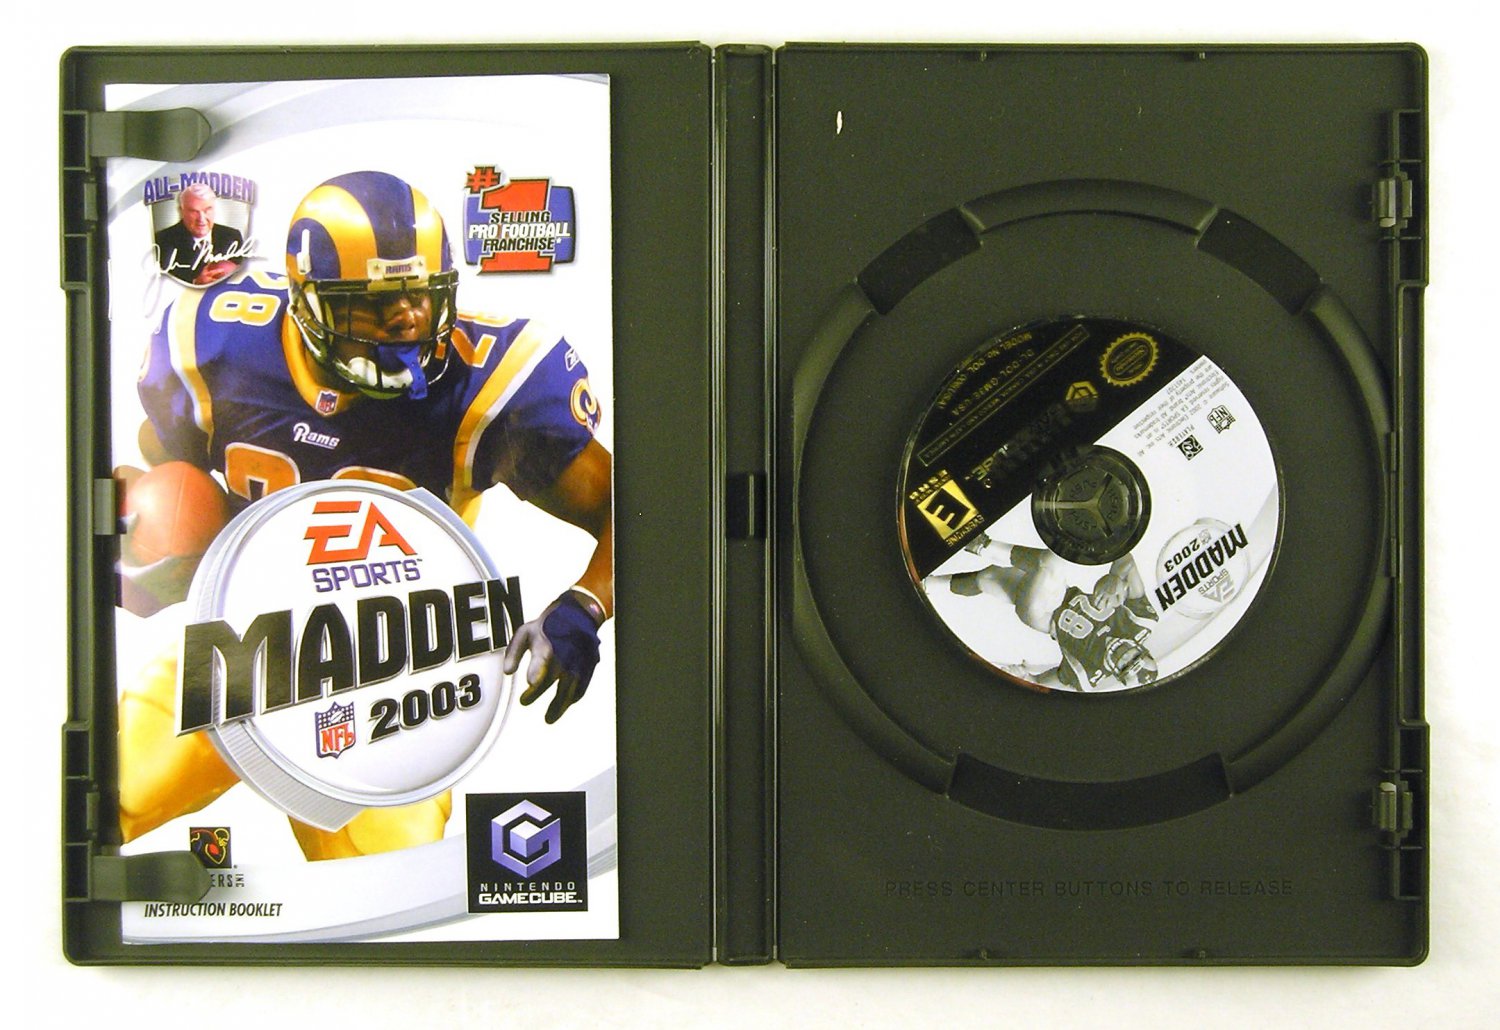 Ea Sports Maadden 2003 For Nintendo Gamecube